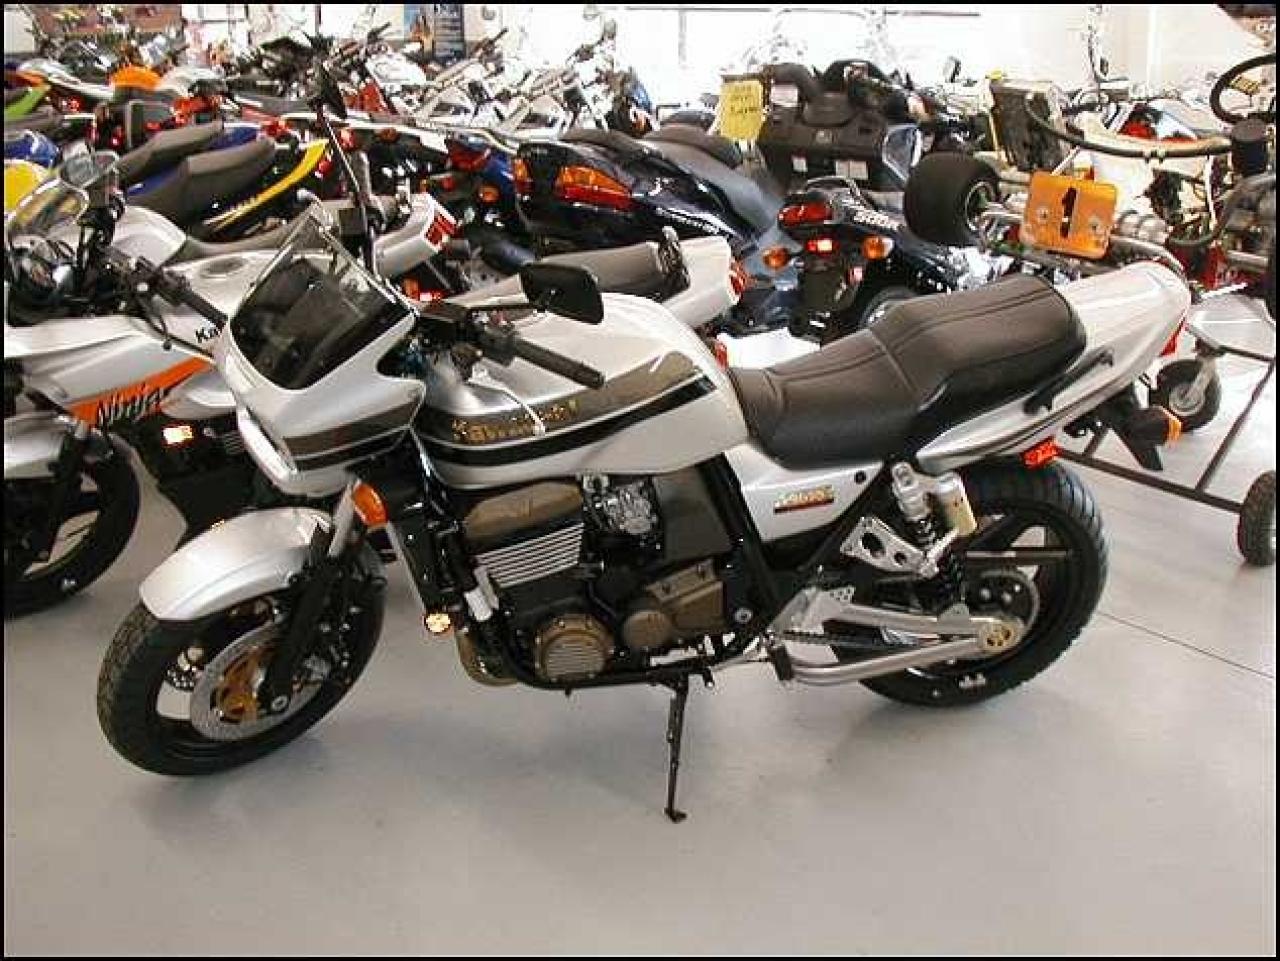 Kawasaki zrx 1200 - неплохой дорожный мотоцикл от кавасаки